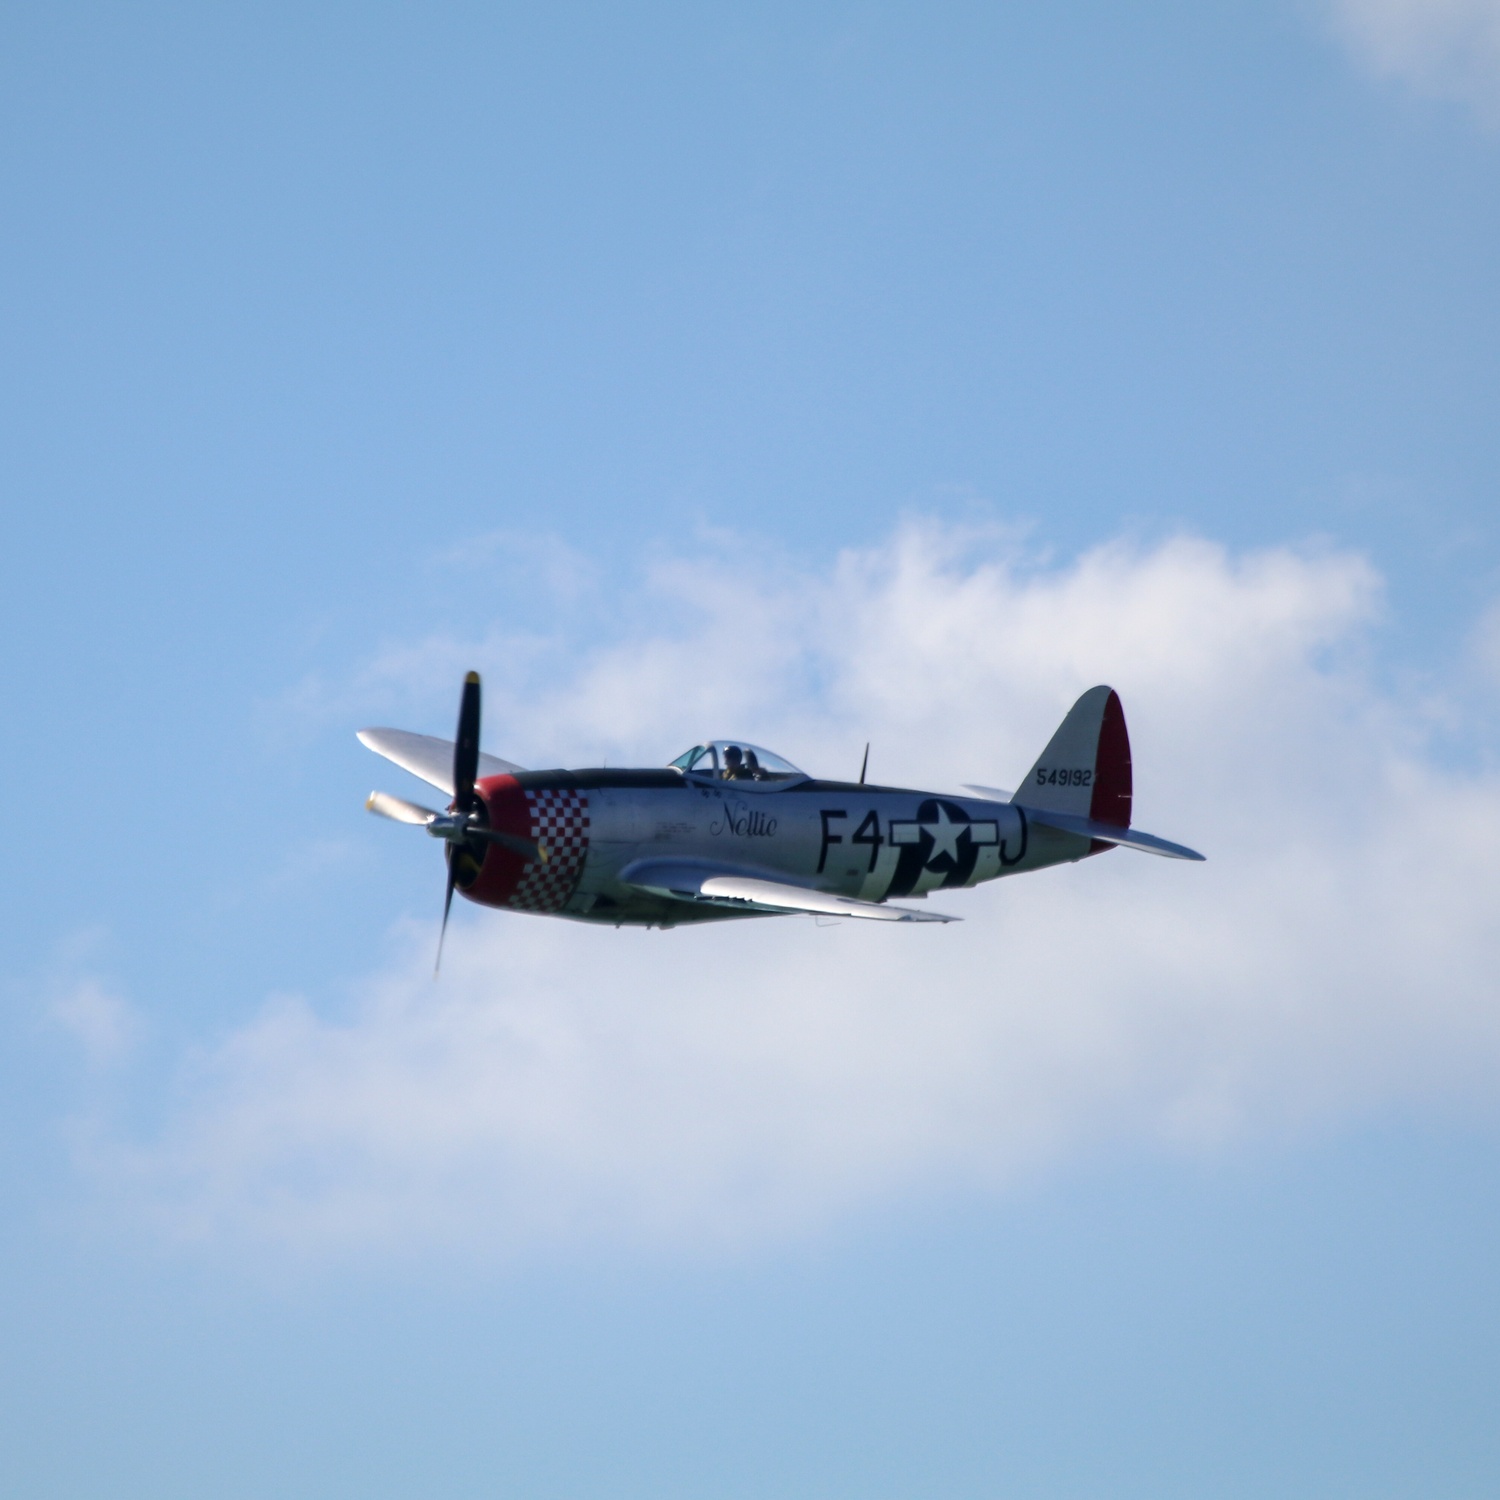 Republic P-47 Thunderbolt flying left against cloudy blue sky